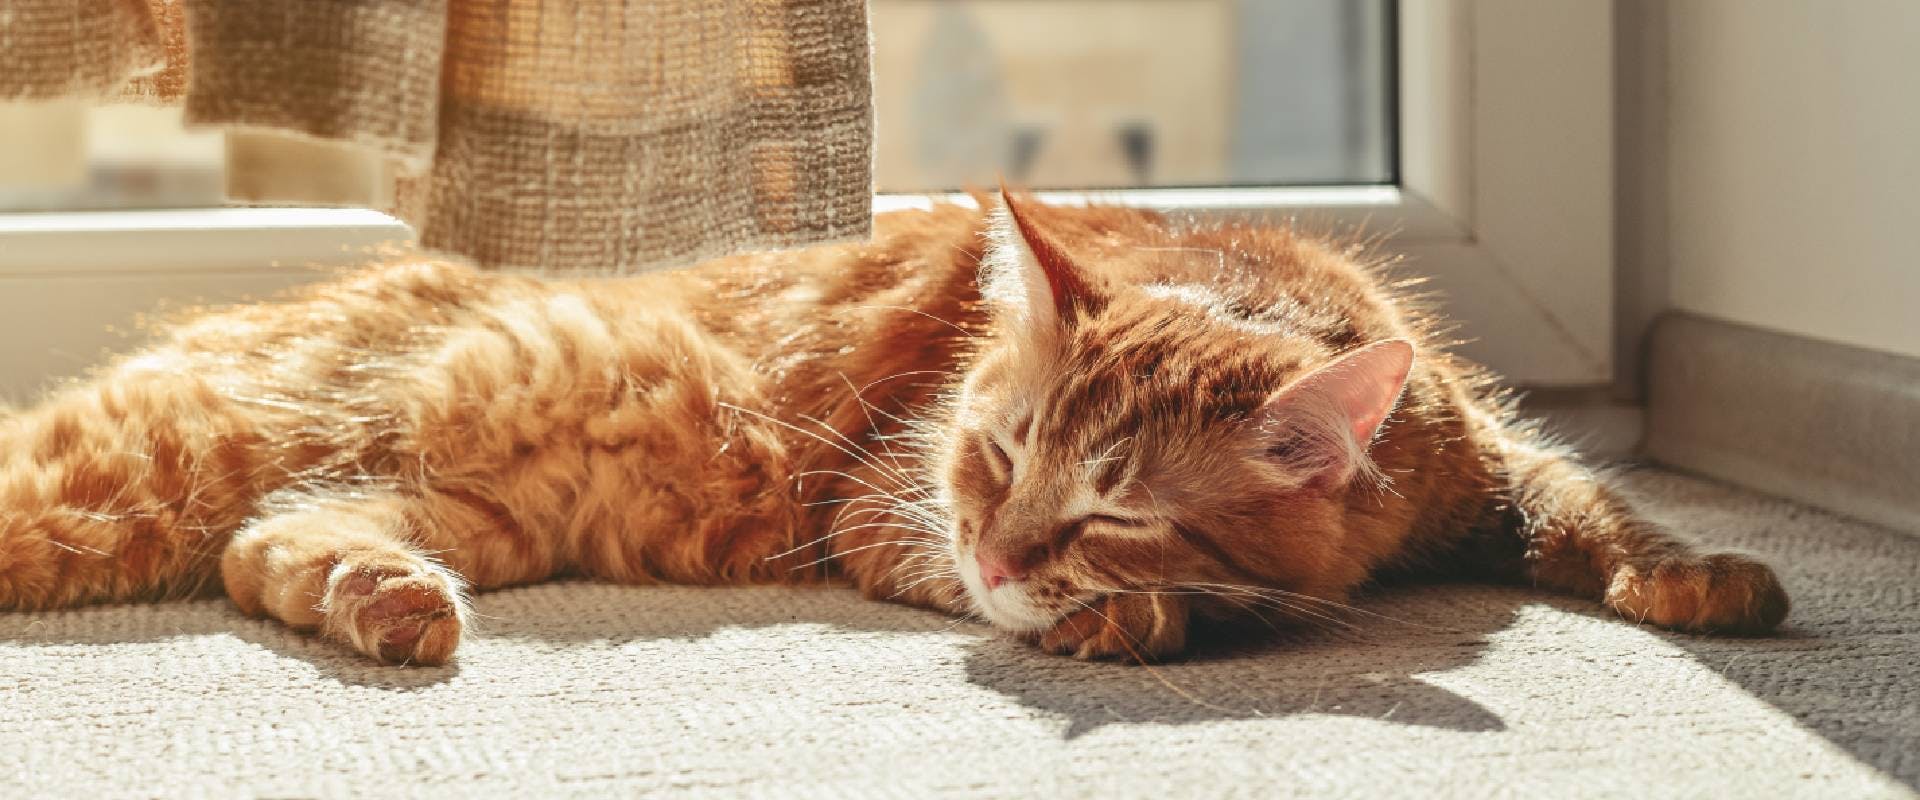 Ginger cat sleeping in sun spot